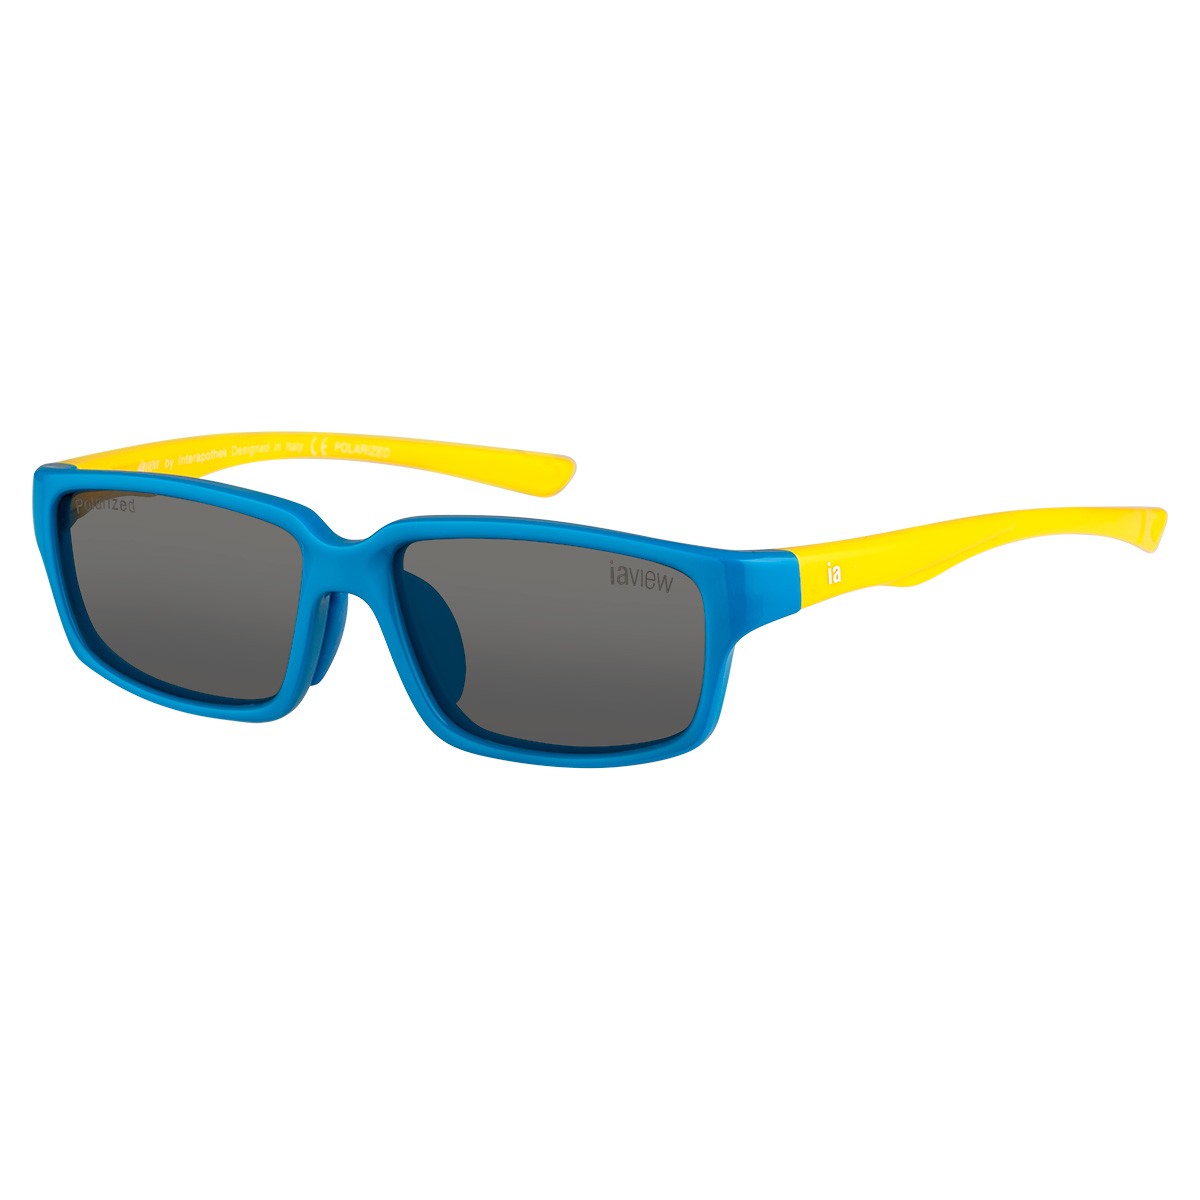 Iaview kids gafa de sol para niños k2309 QUAD azul y amarilla polarizada